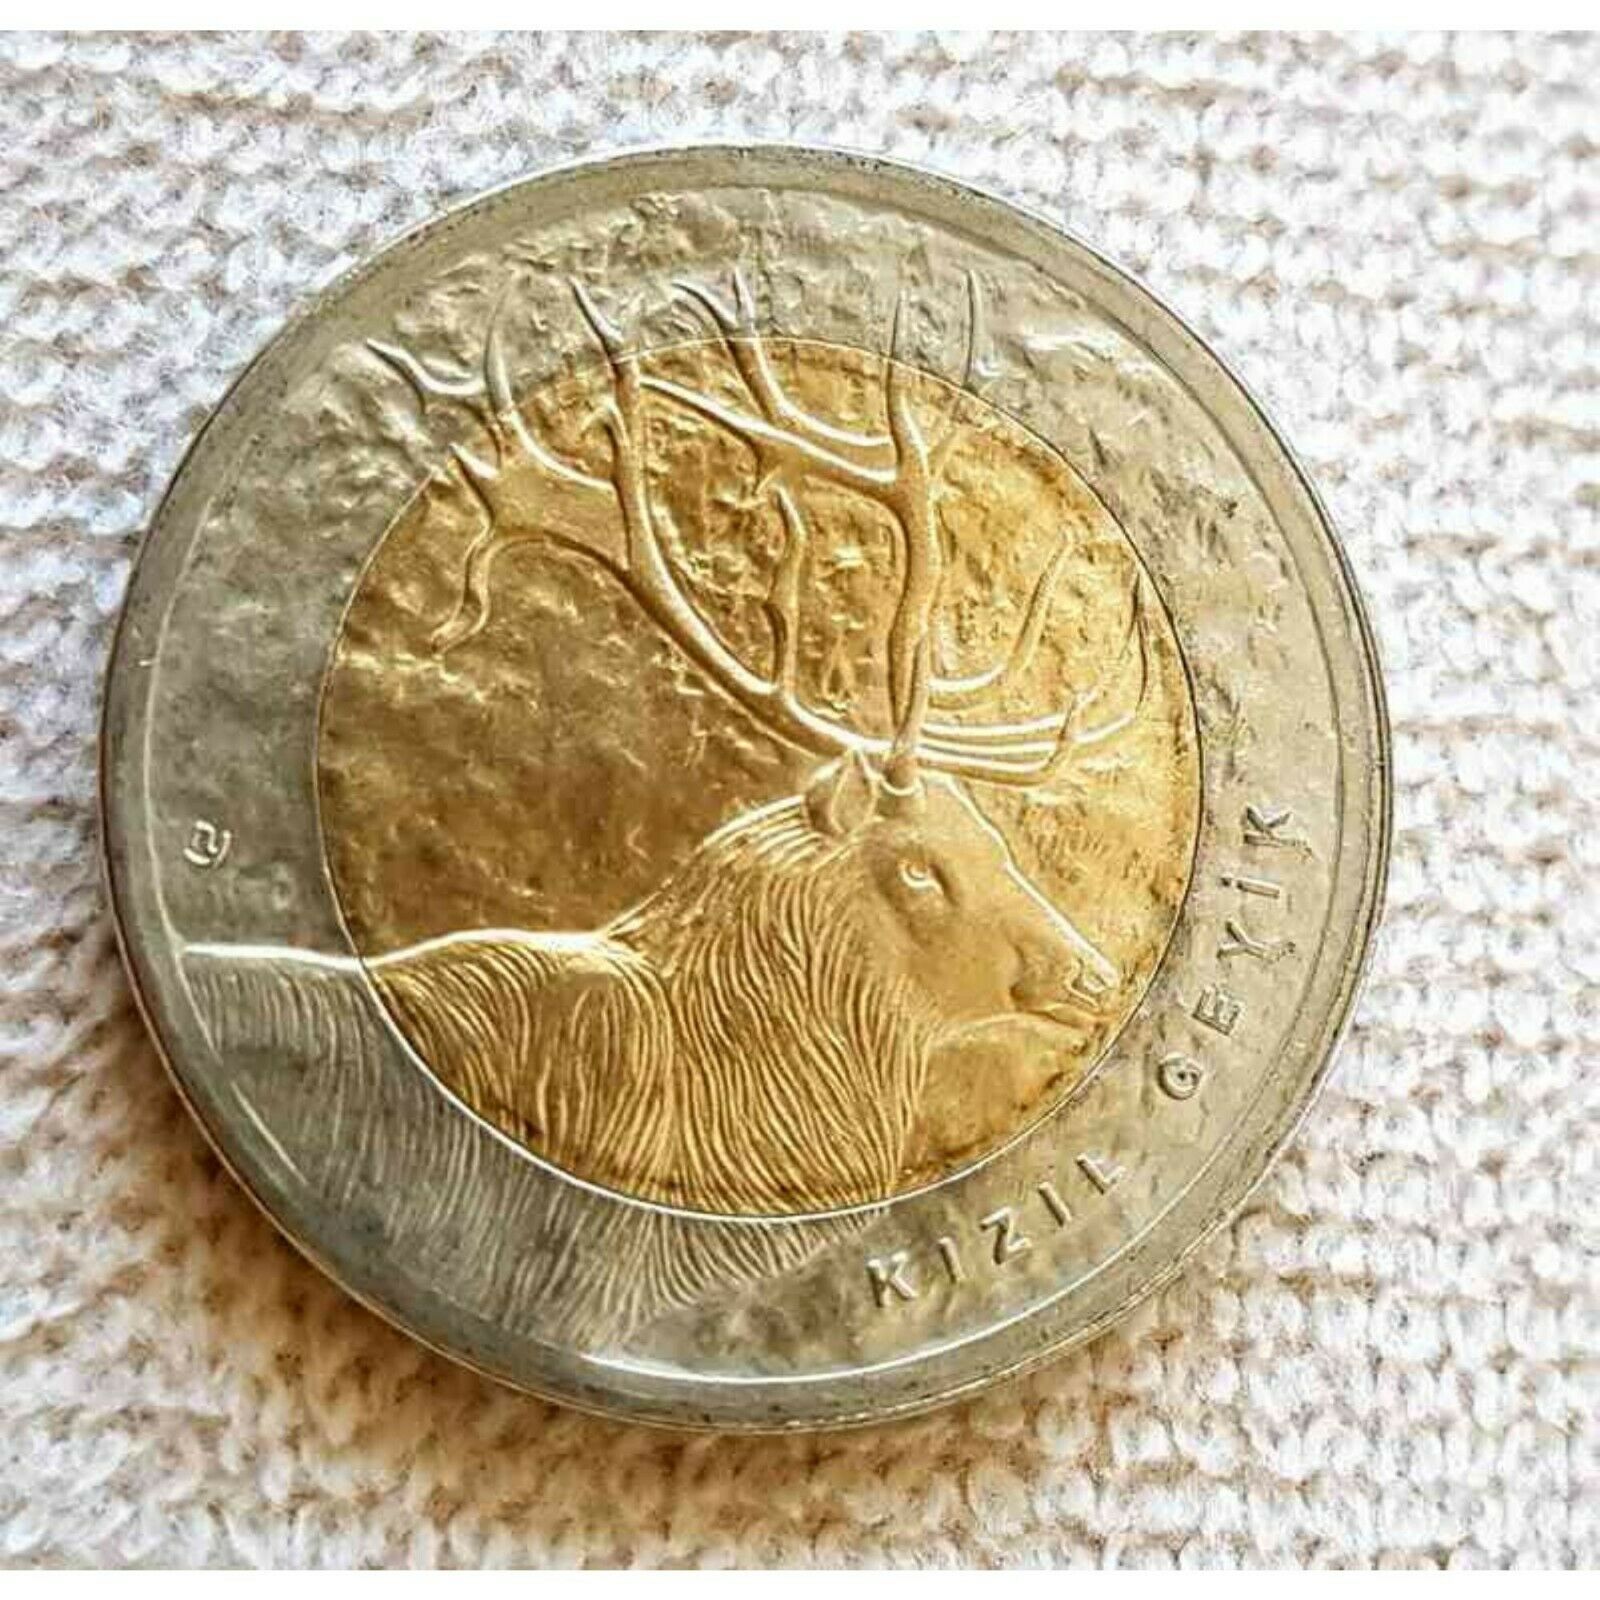 Turkey 1 Lira 2012, Red Deer, Bimetal, Commemorative,unc, Coin